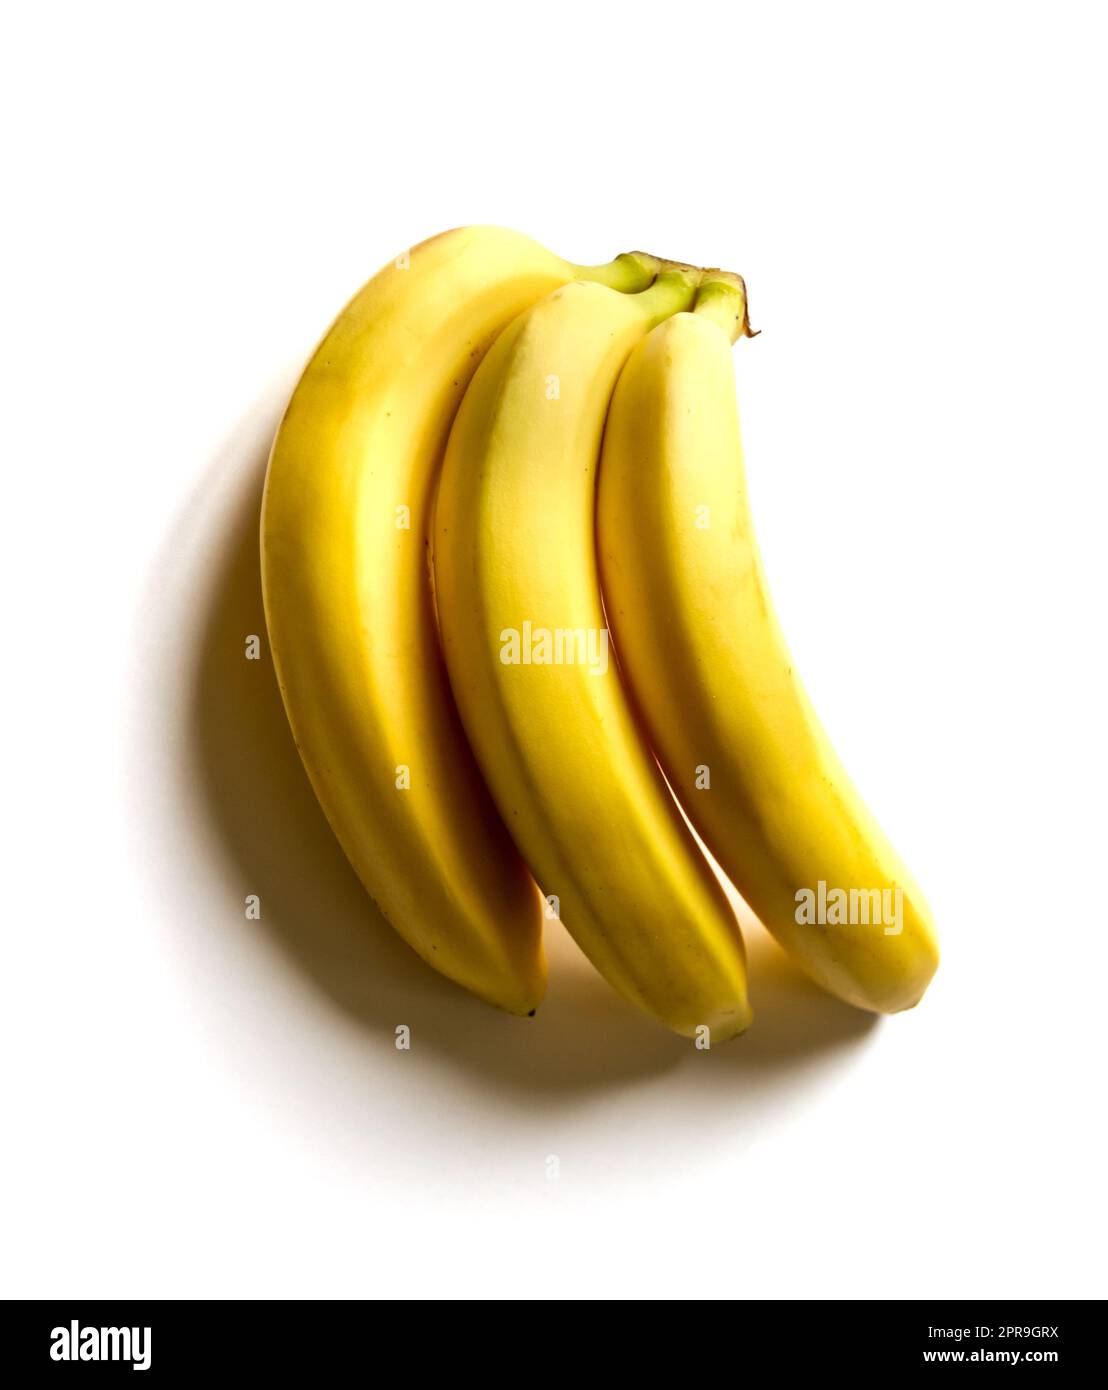 https://c8.alamy.com/comp/2PR9GRX/bunch-of-bananas-isolated-on-white-background-2PR9GRX.jpg